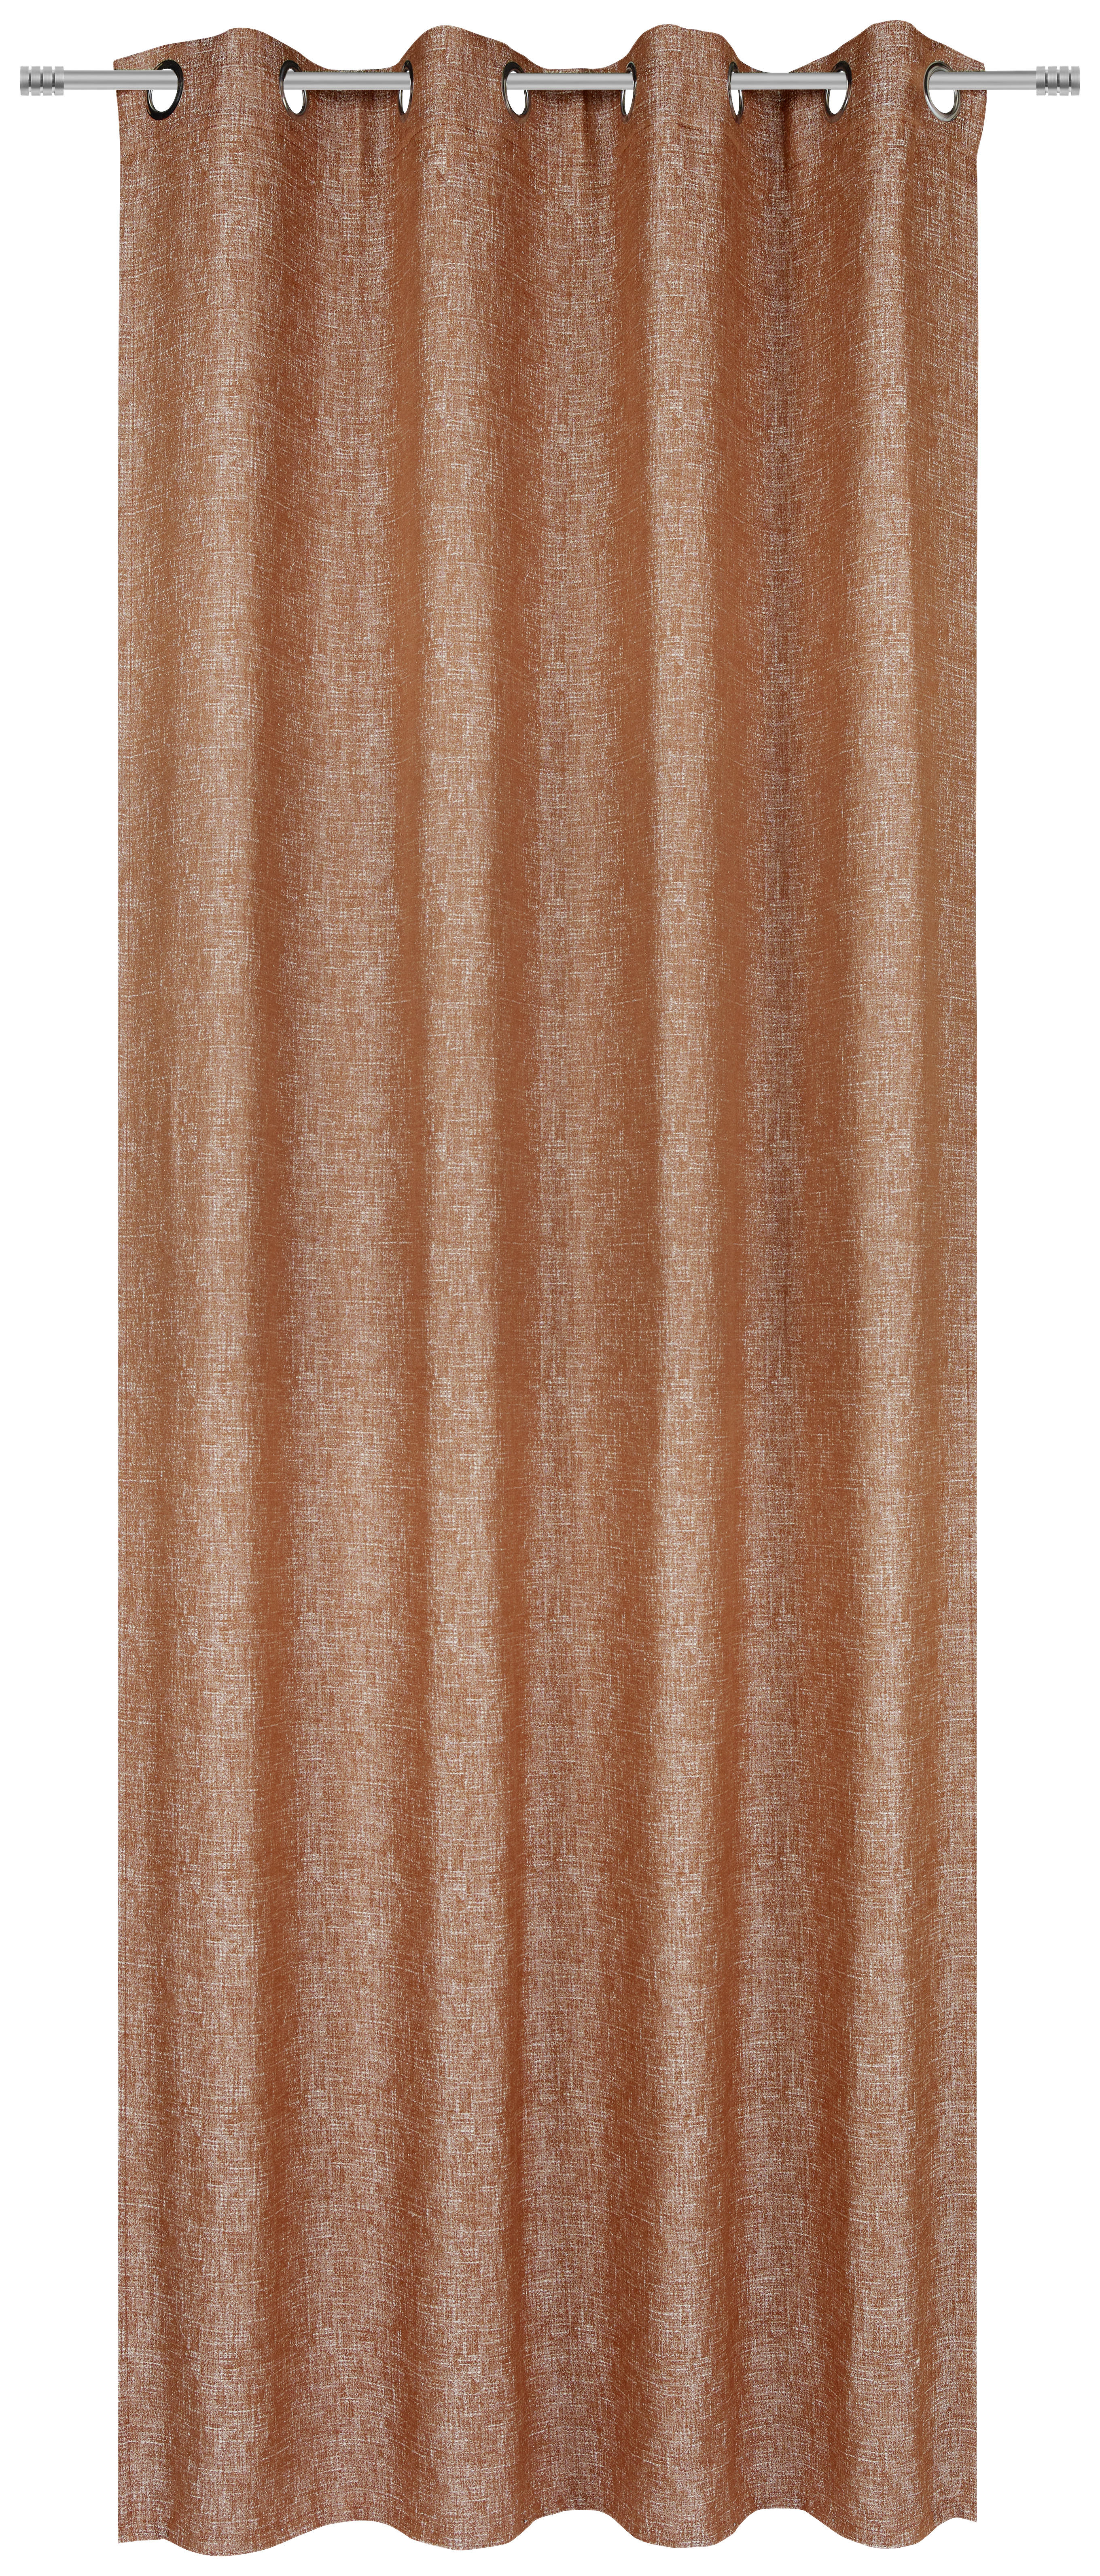 ÖSENSCHAL Gent blickdicht 135/250 cm   - Terracotta, Design, Textil (135/250cm) - Ambiente